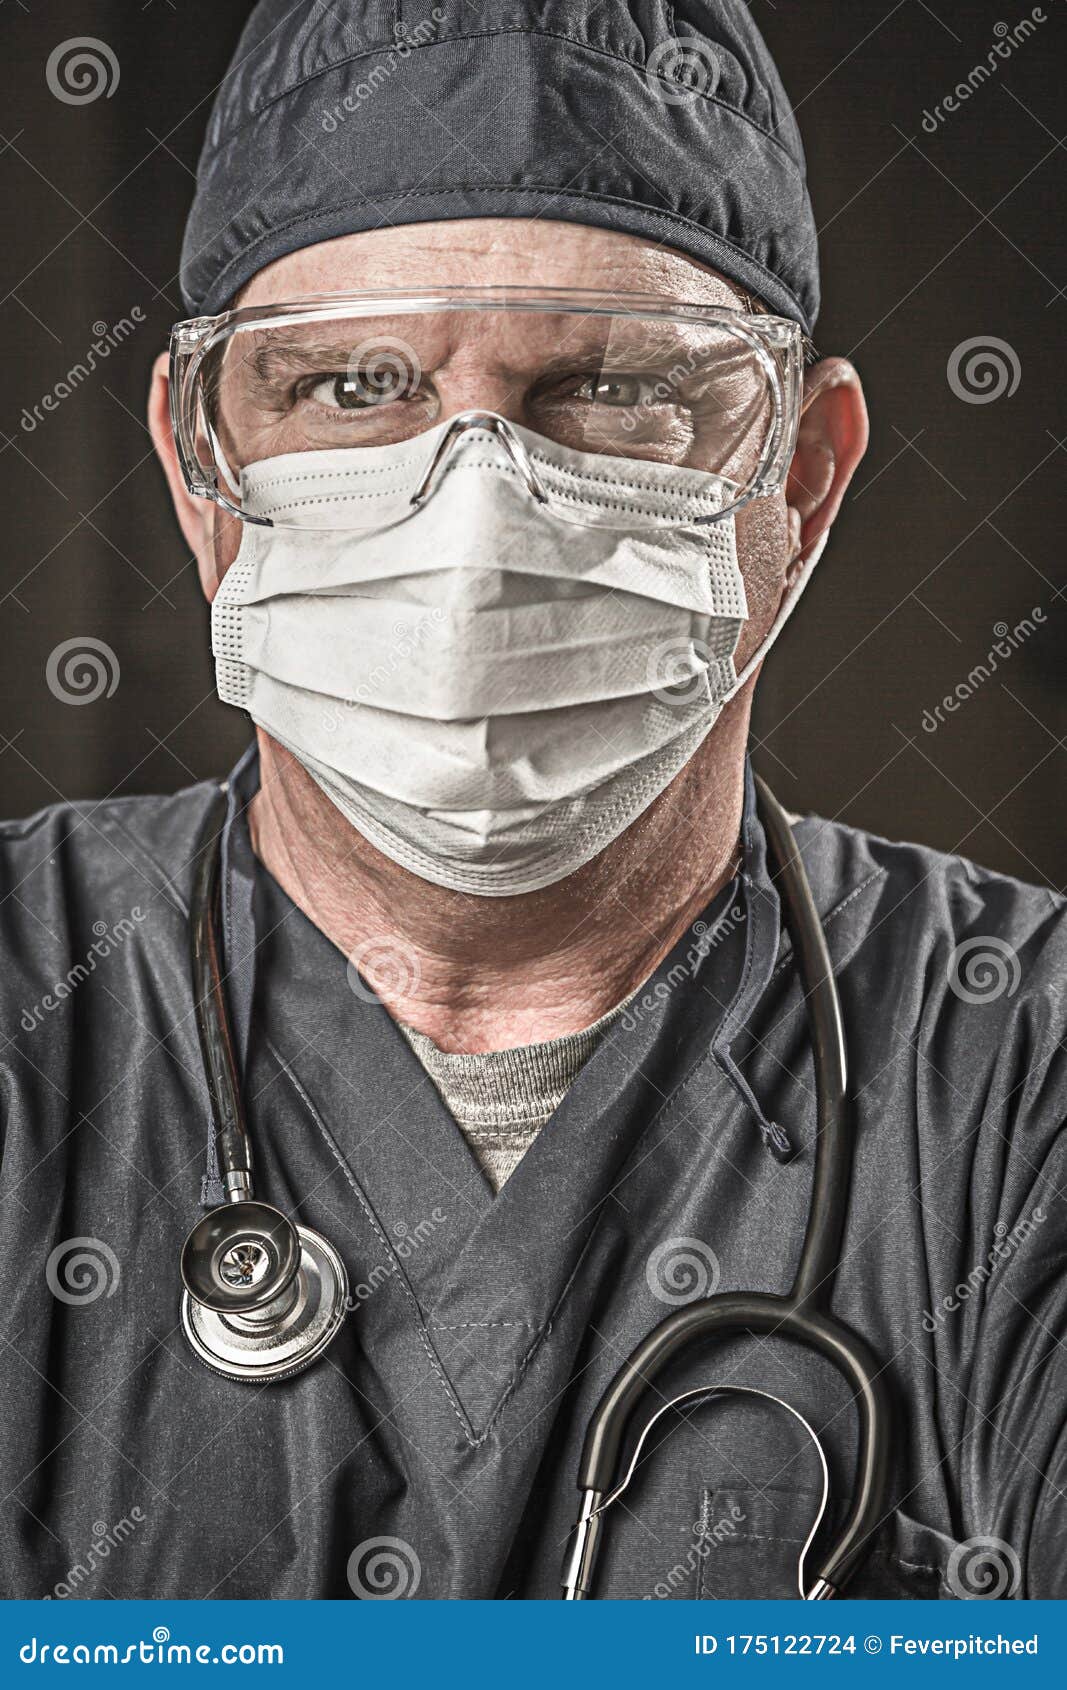 equipe médica de médicos e enfermeiros usando máscaras protetoras